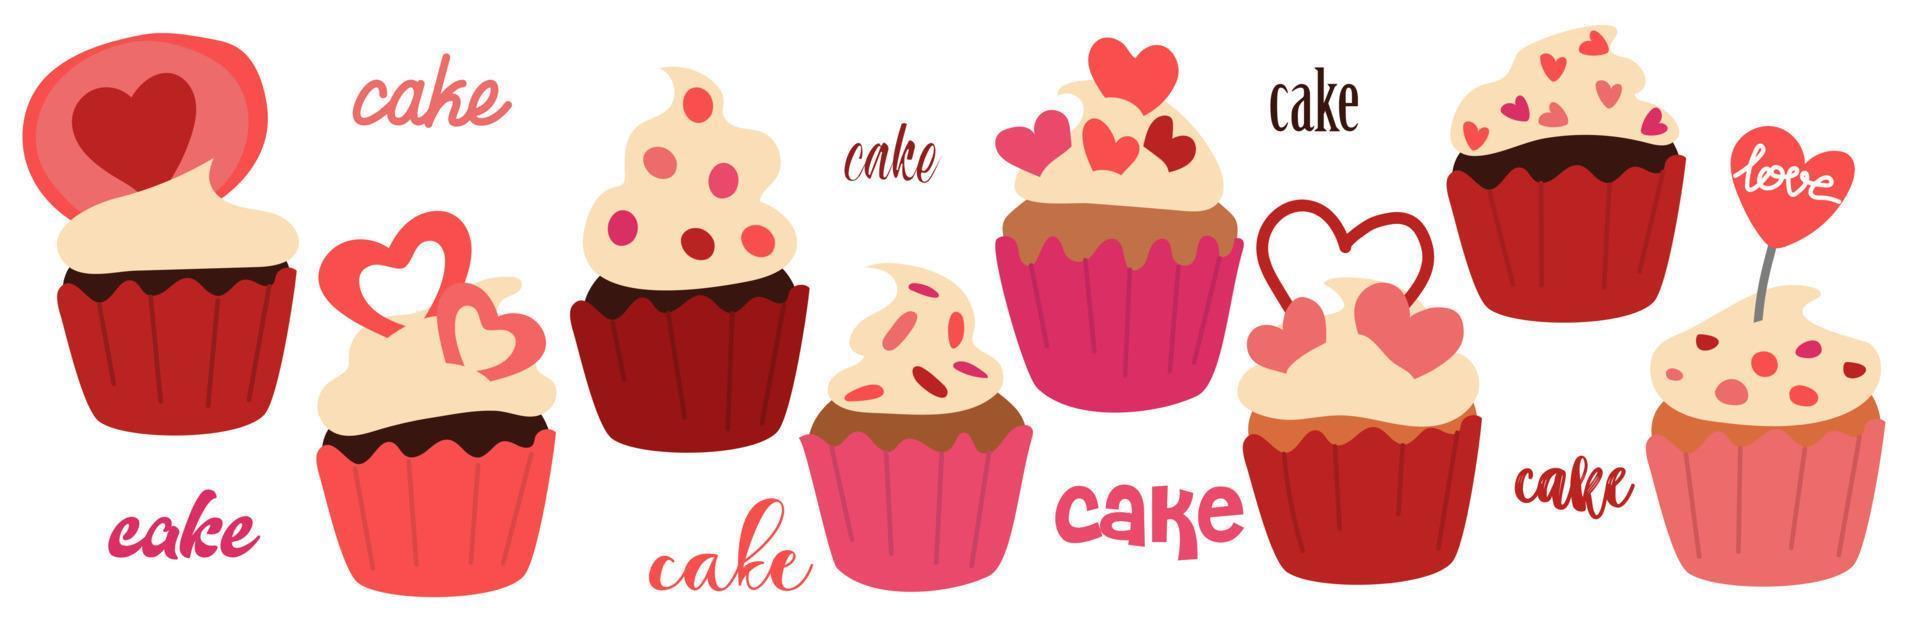 conjunto de cupcakes dulces. colección de muffins cremosos con decoración. comida deliciosa confitería. ilustración vectorial de horneado dulce sobre fondo blanco. vector